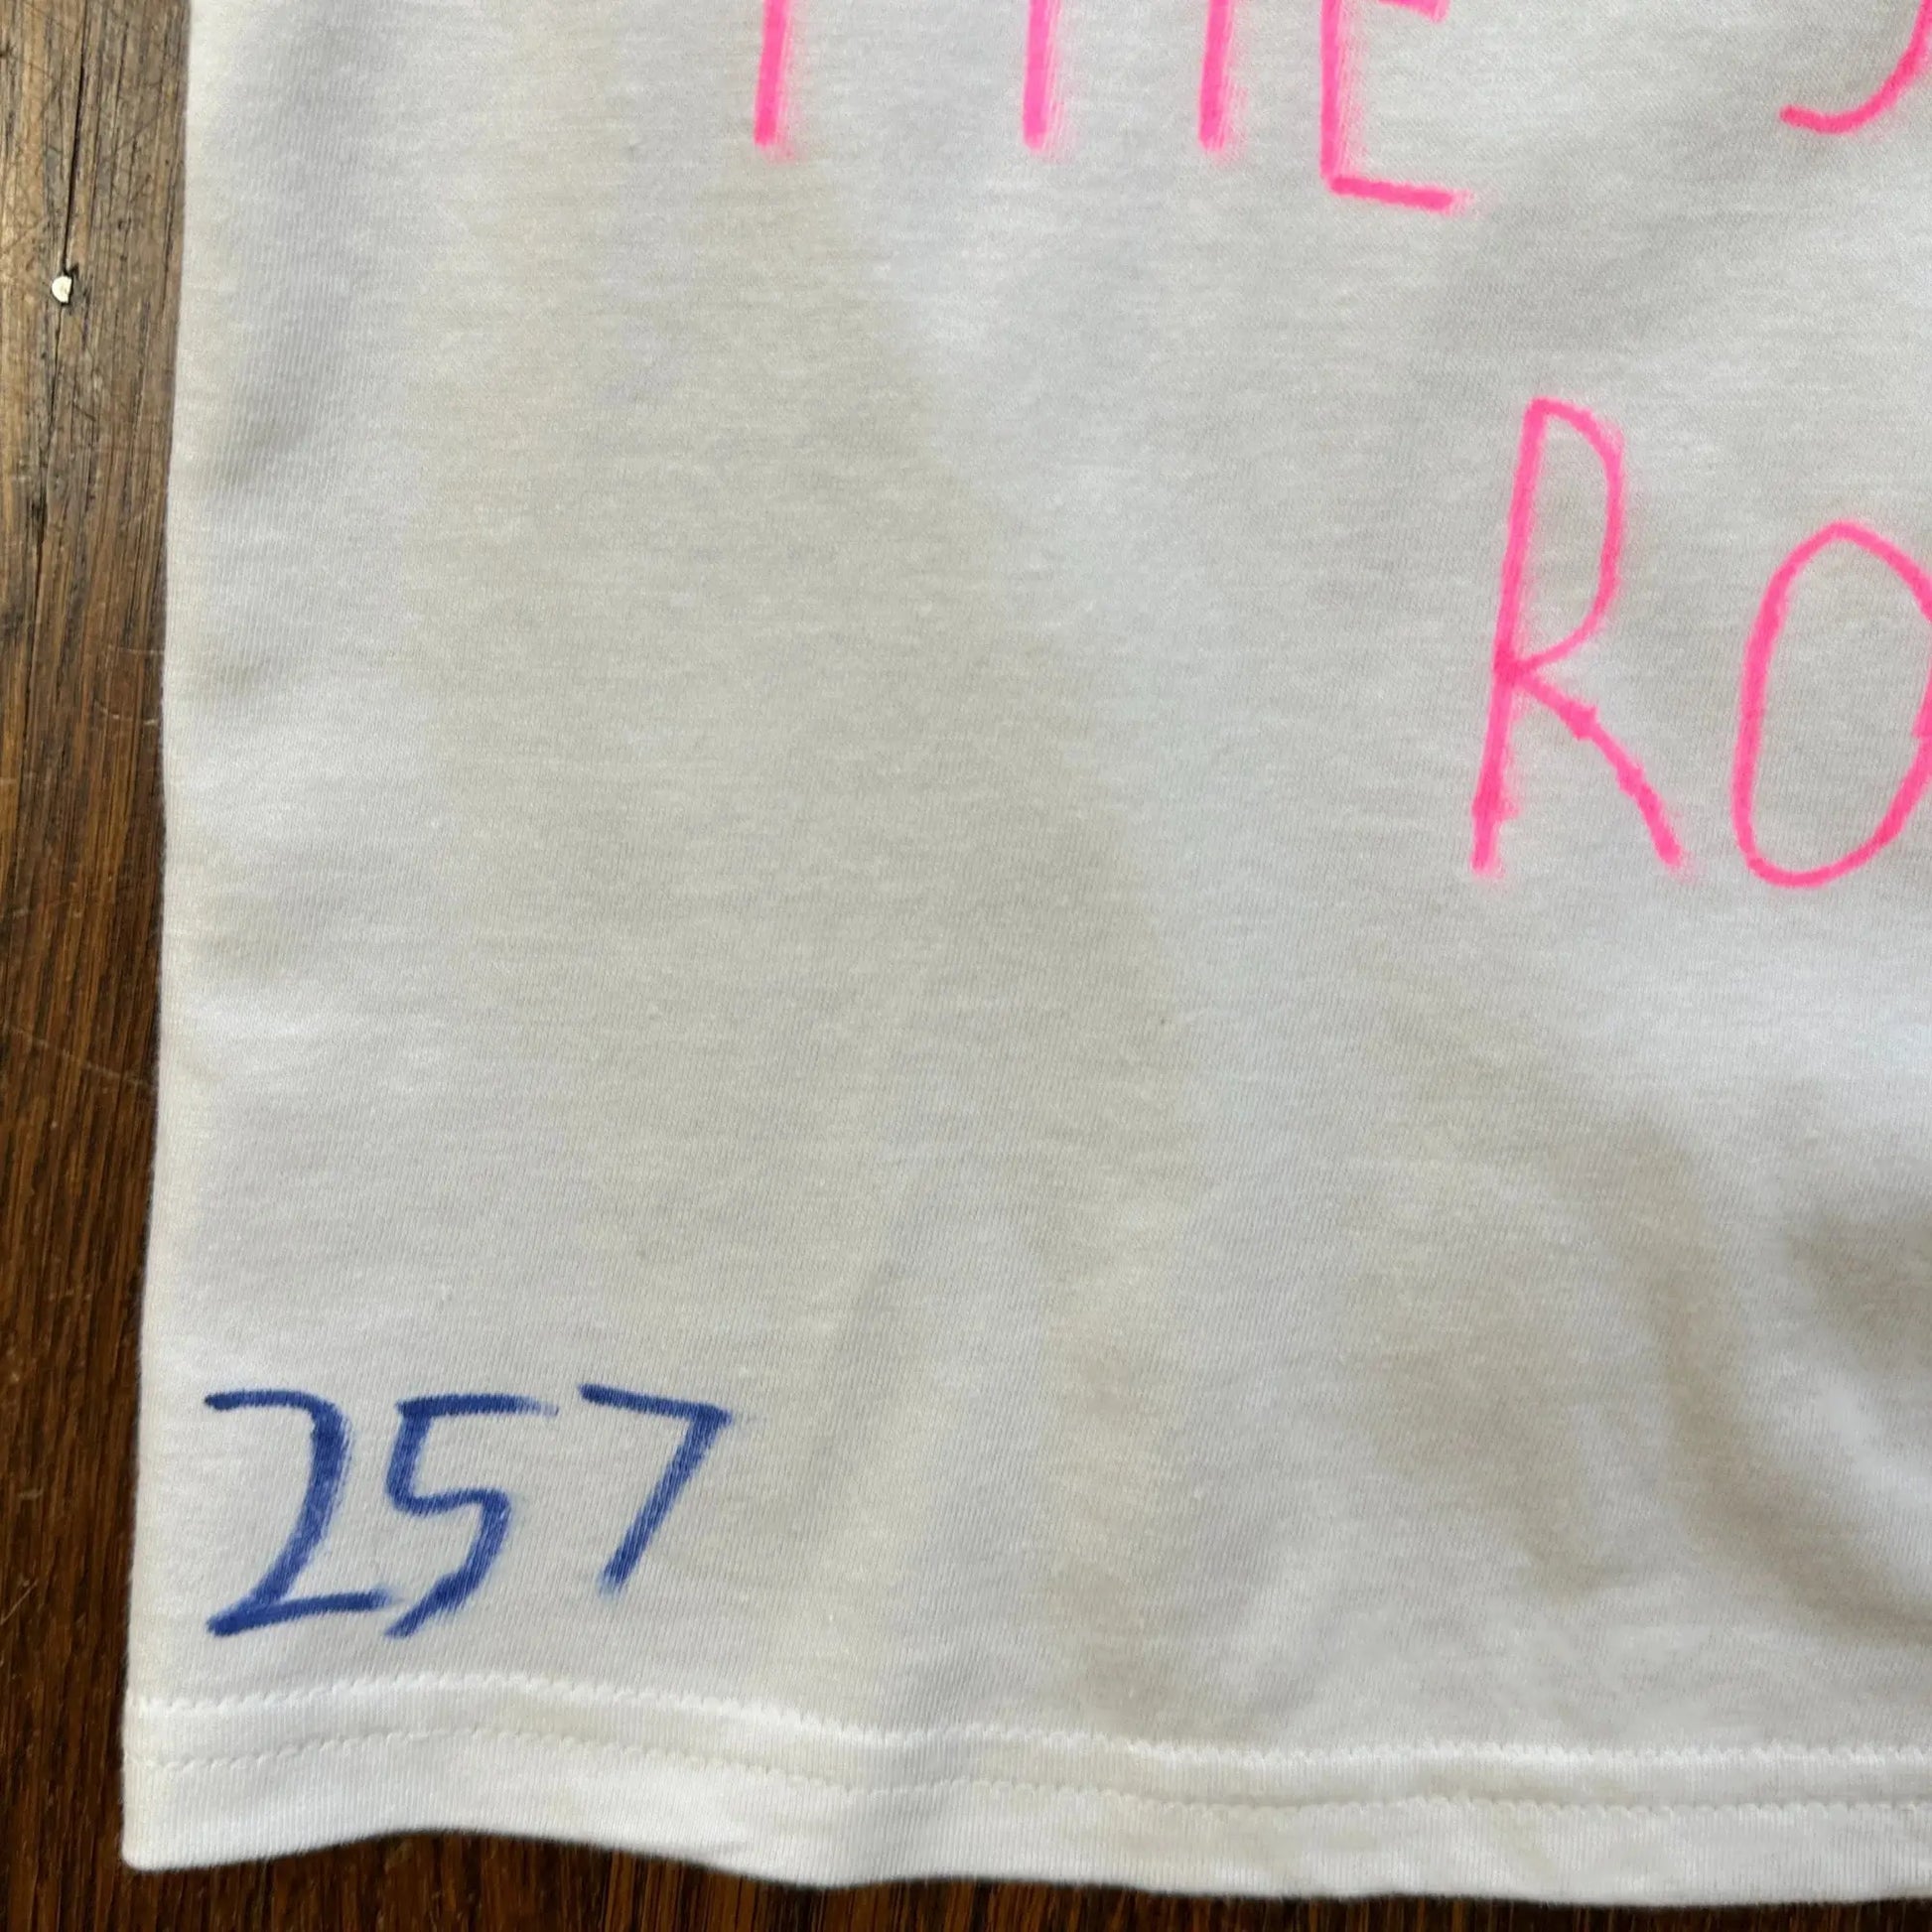 Buy Dylan's T-Shirt Club The Super Cool Robot T-Shirt - White | T-Shirtss at Woven Durham